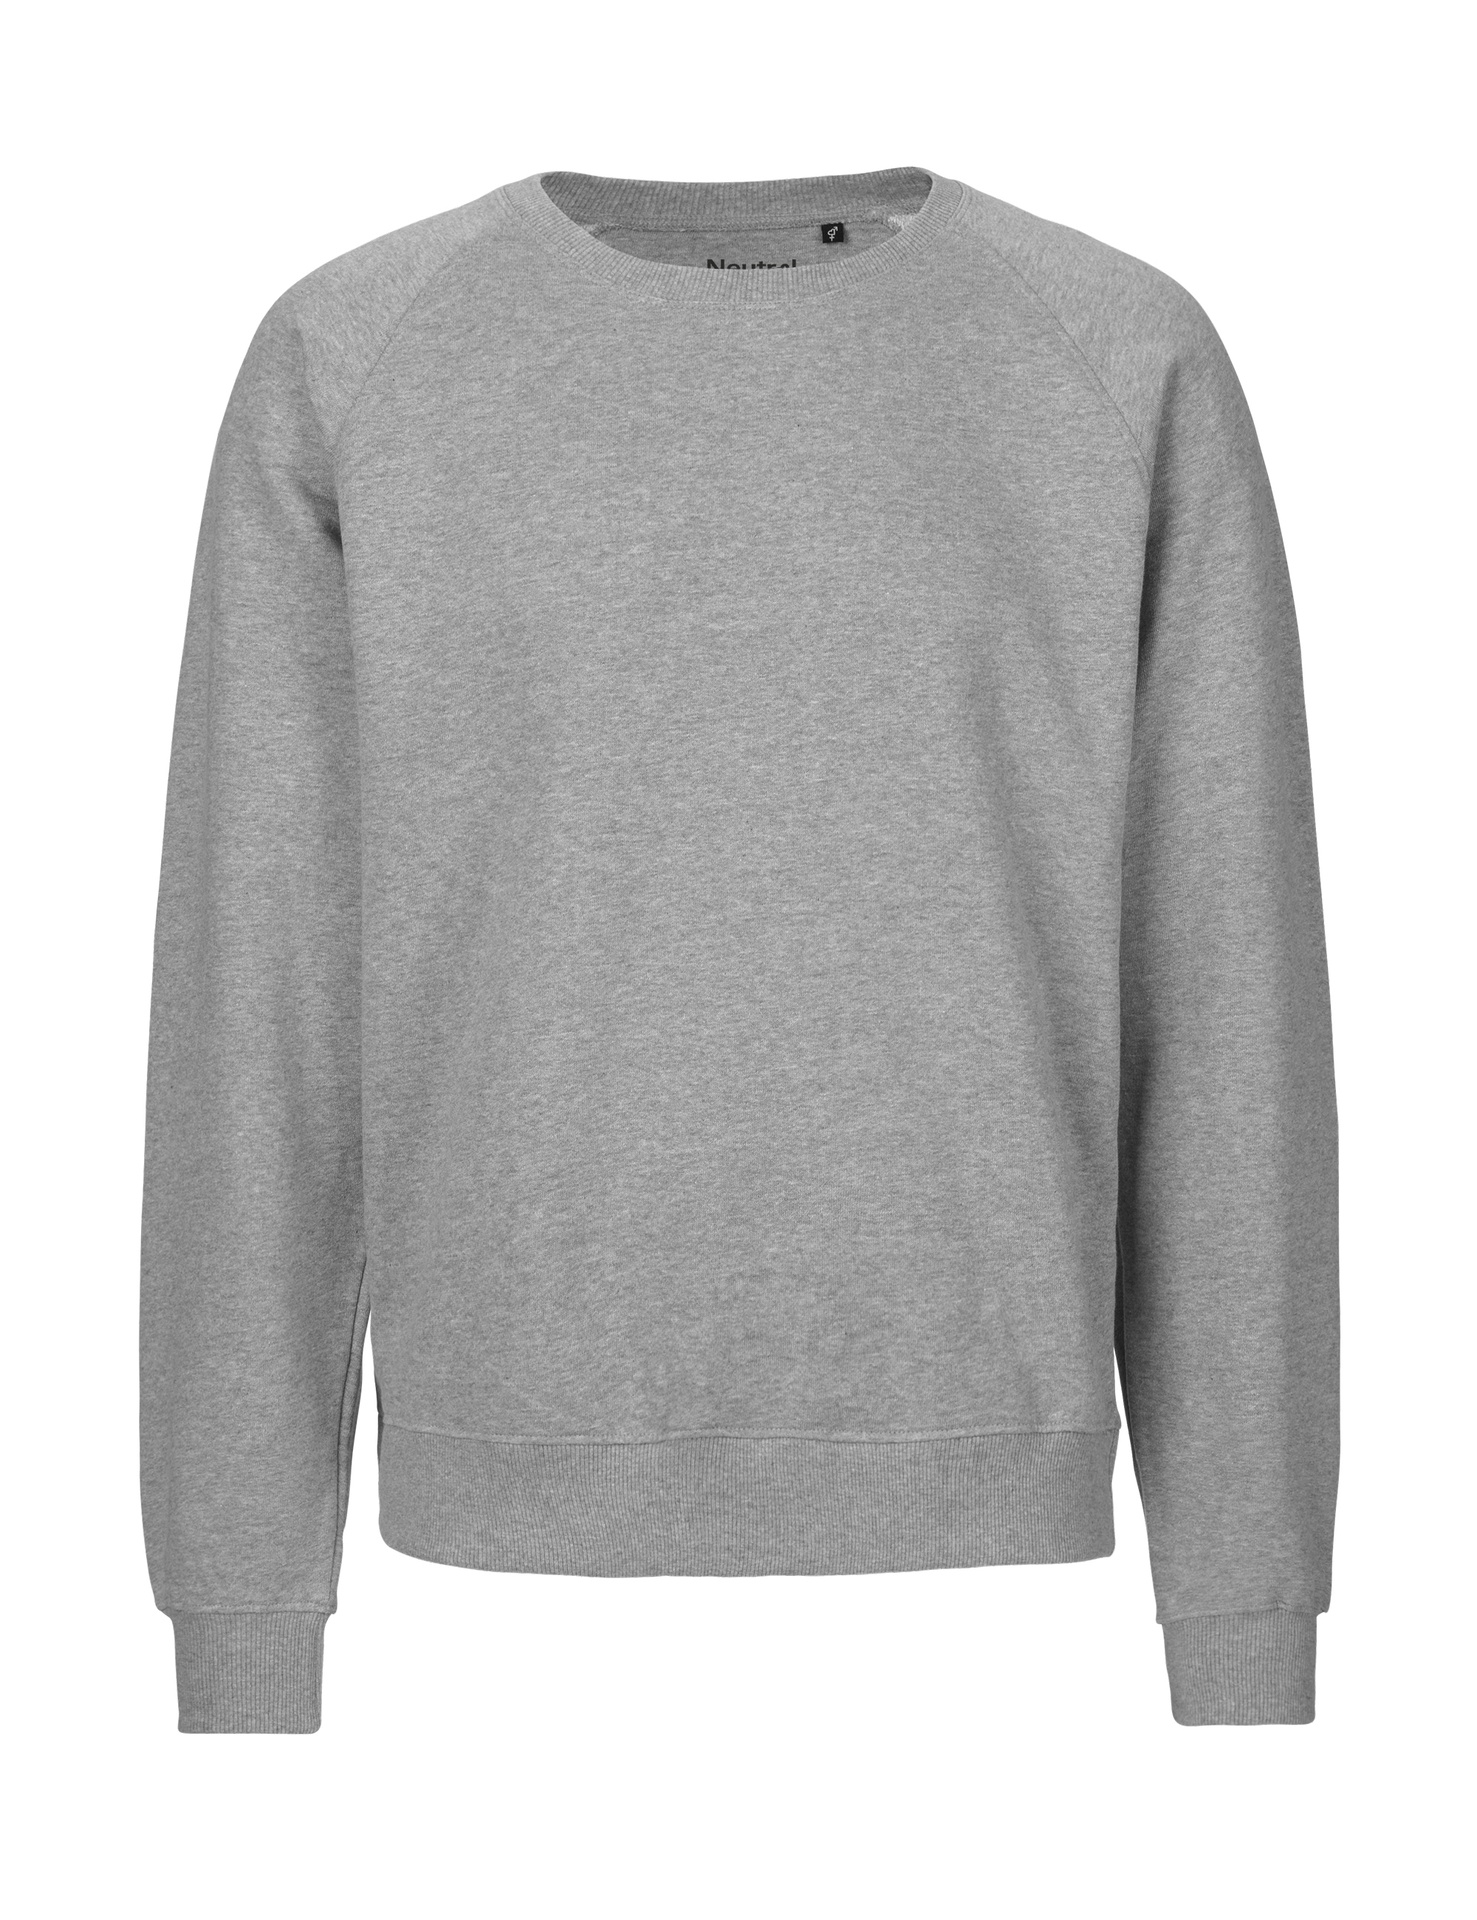 [PR/02744] Unisex Sweatshirt (Sport Grey 21, M)